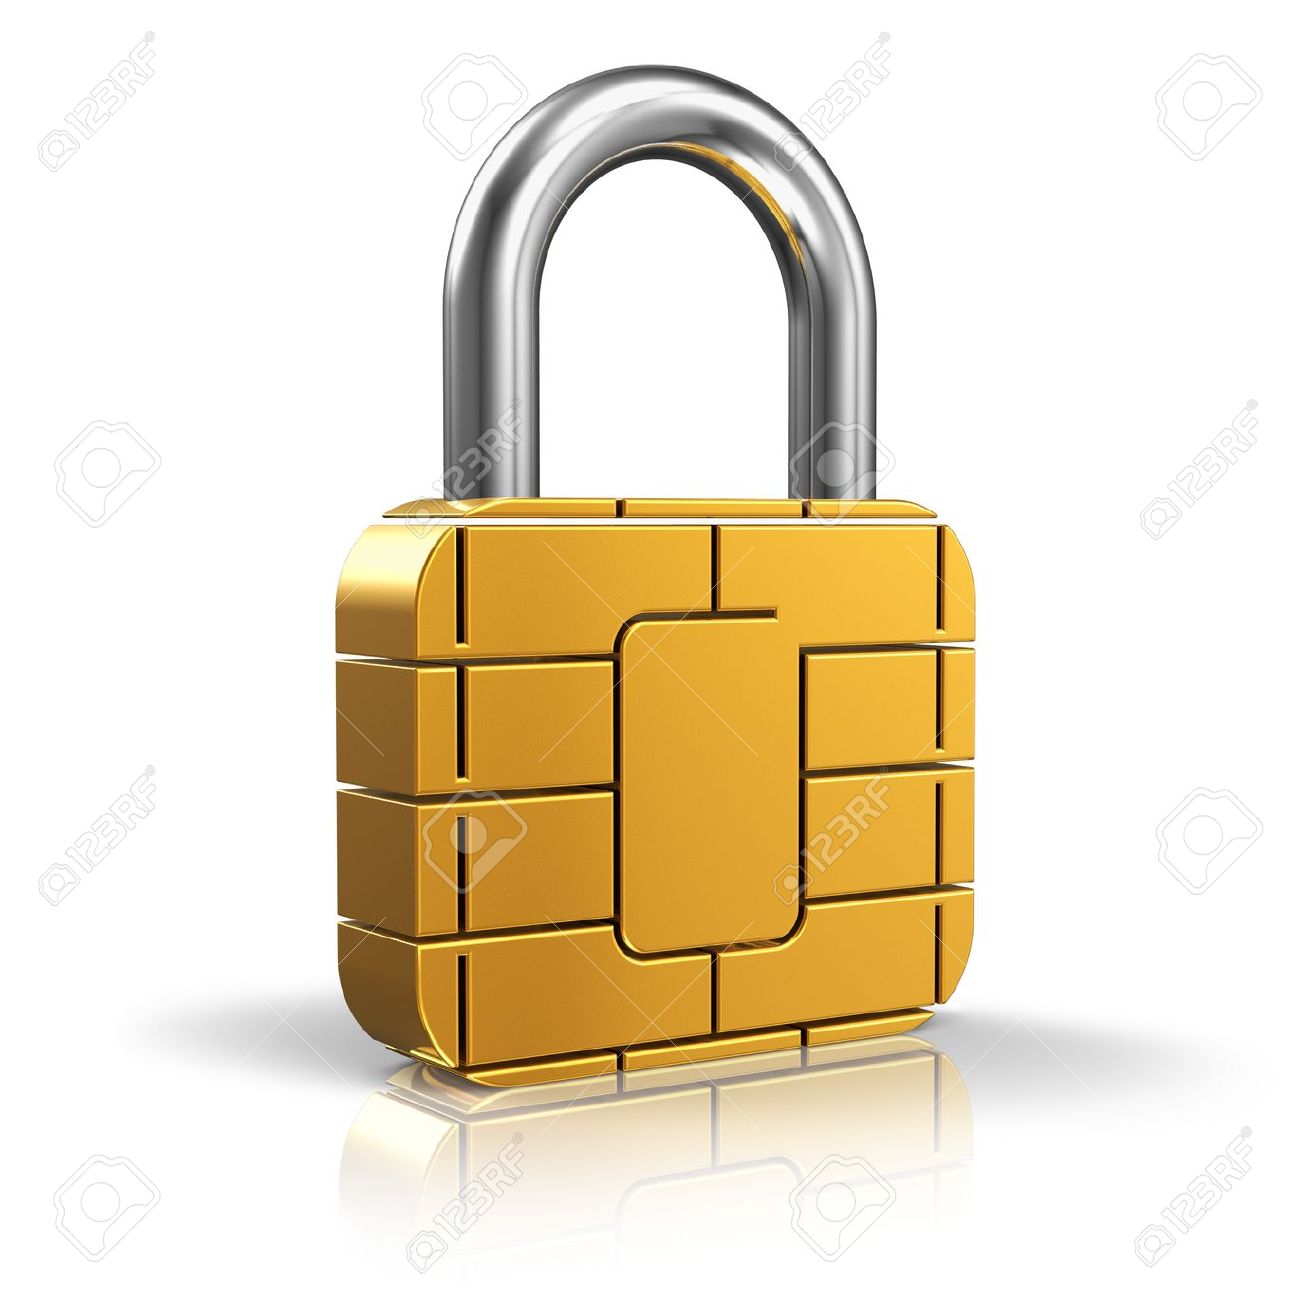 15494850 SIM card or credit card security concept golden padlock from card microchip isolated on white backgr Stock Photo | Electronic Sim Cards | Samsung และ Apple จับมือกับเครือข่ายมือถือพัฒนา Next-Gen SIM Card ให้เราสามารถเปลี่ยนค่ายมือถือได้เองในทันที